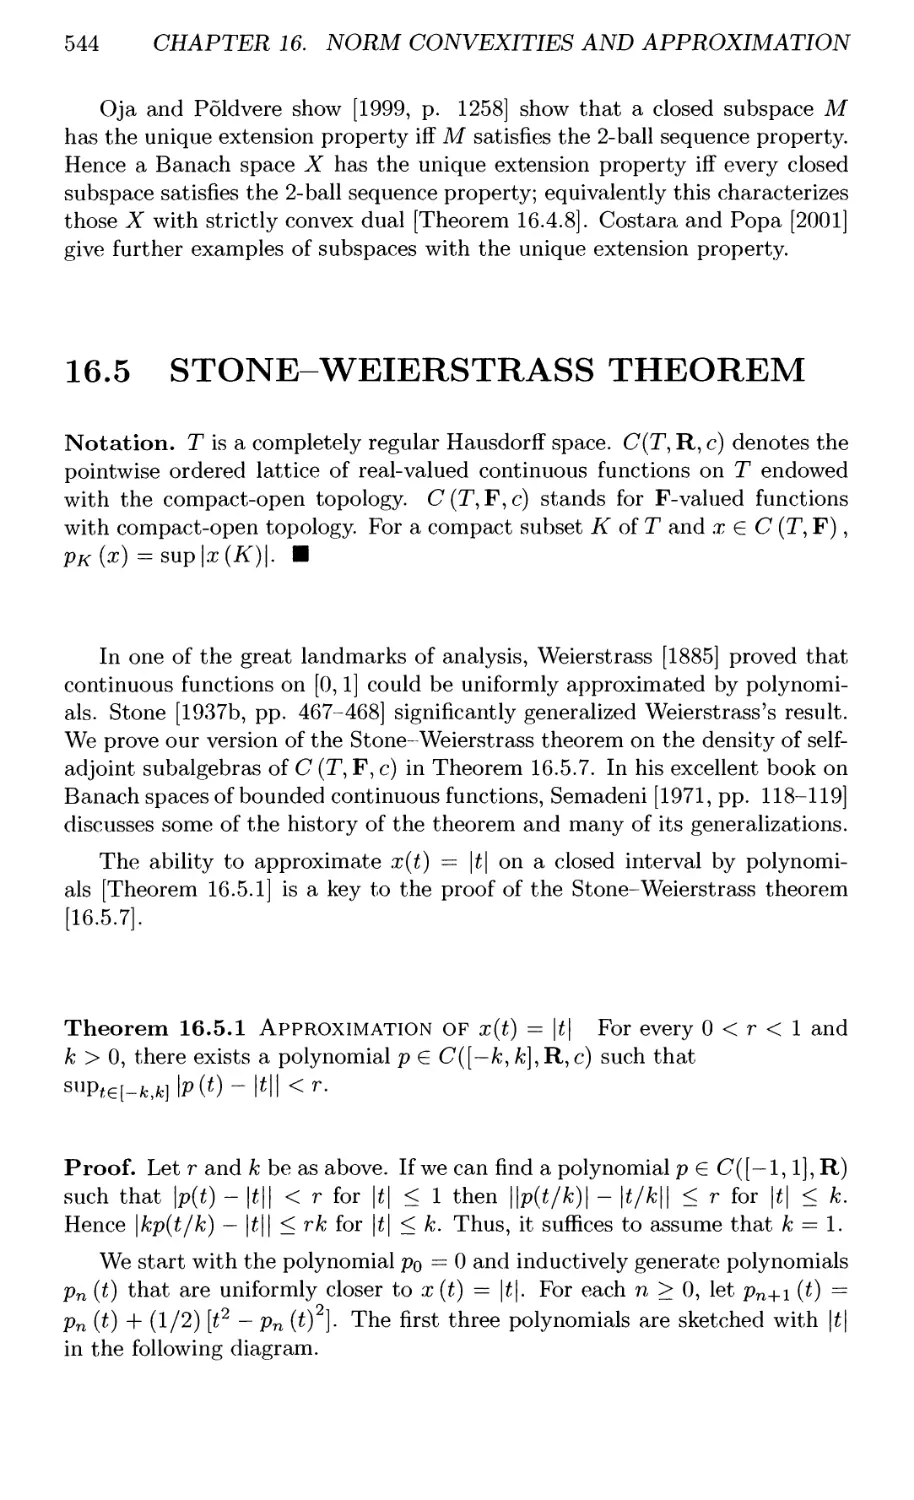 16.5 STONE-WEIERSTRASS THEOREM